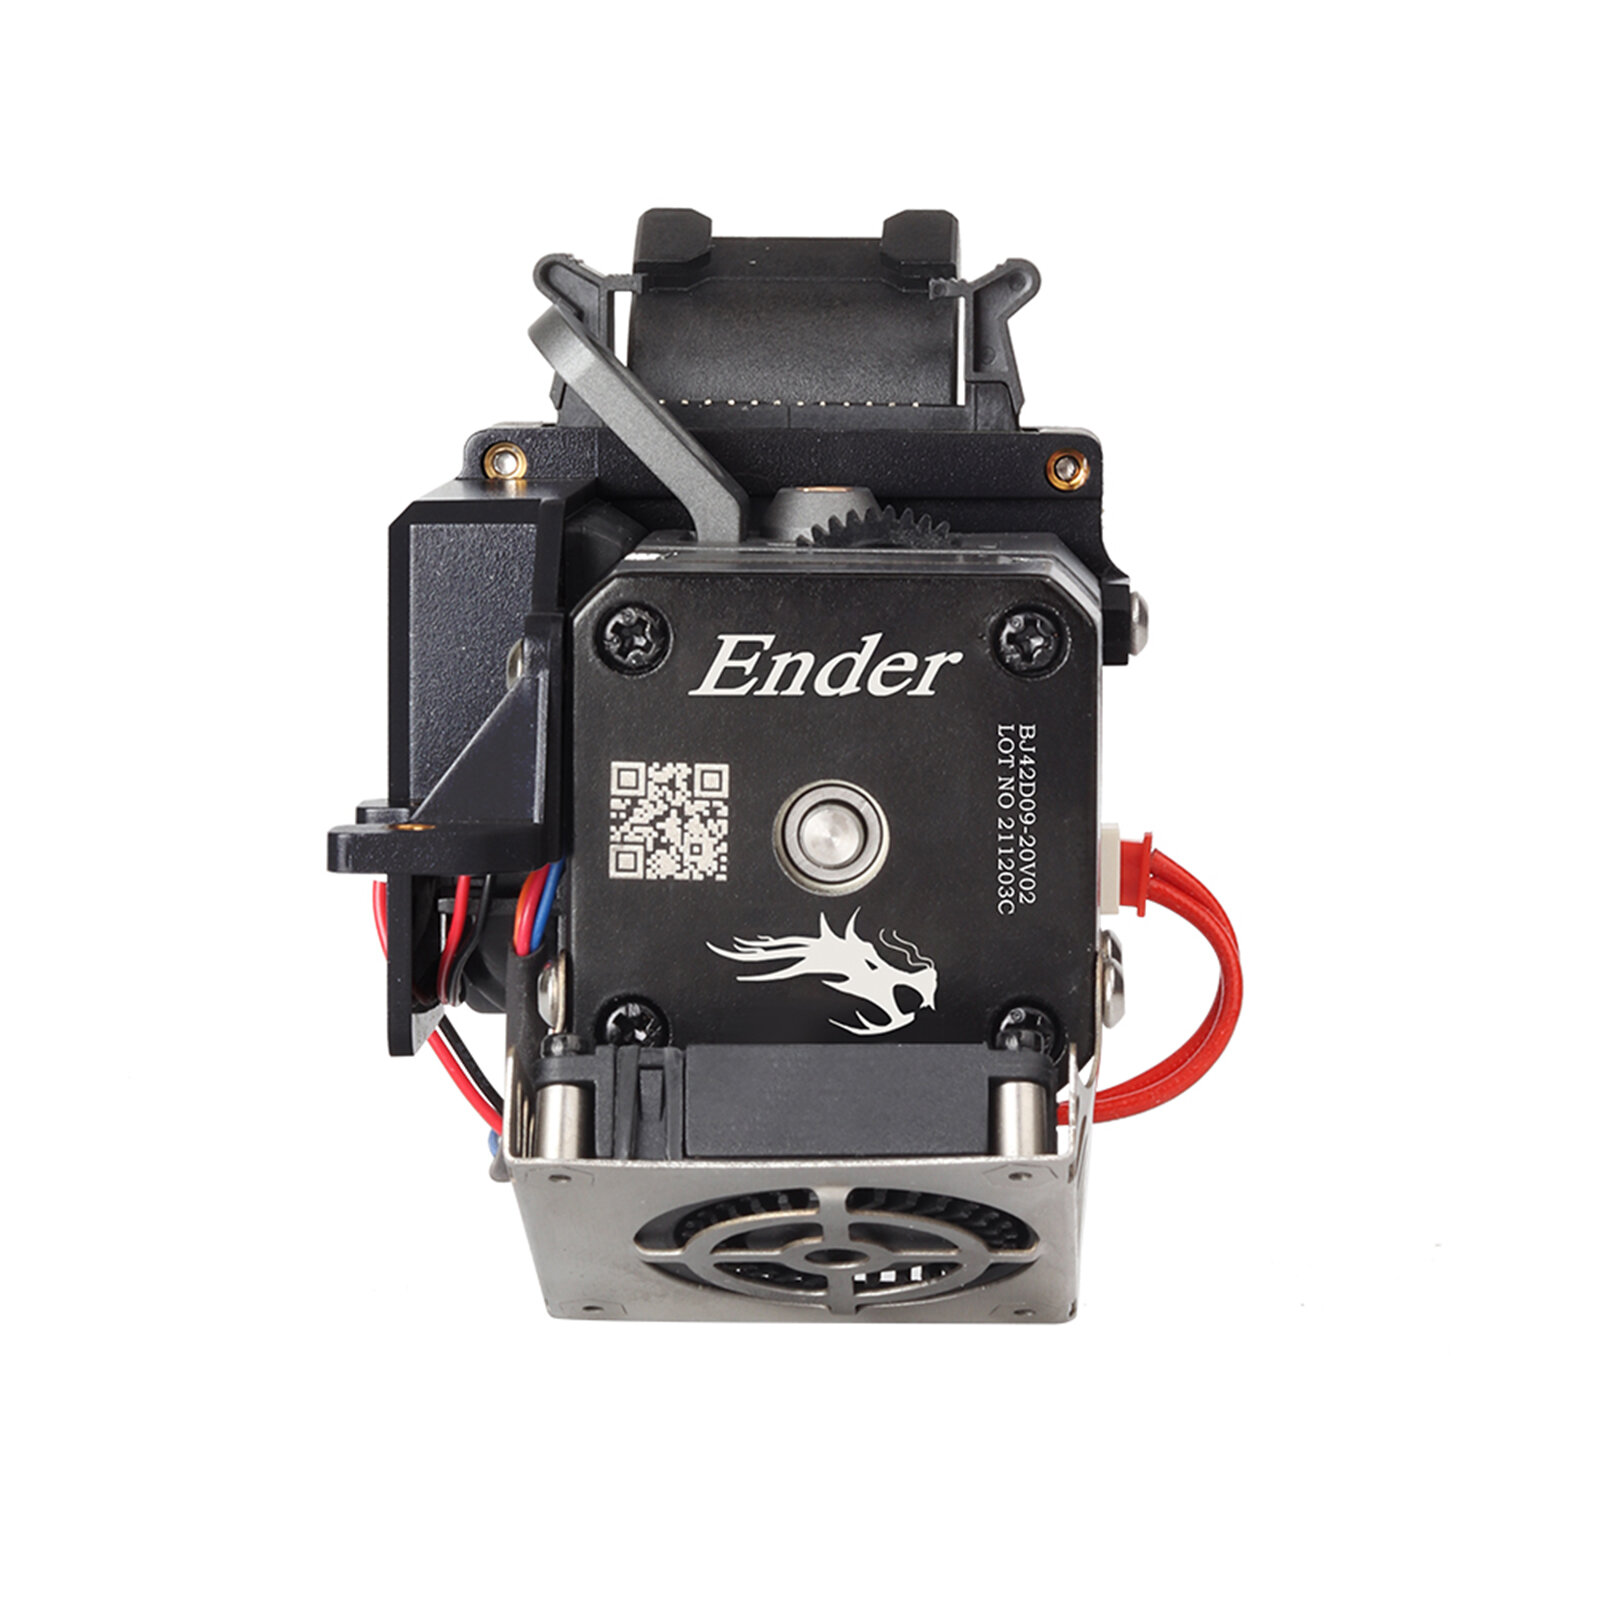 

Creality 3D Printer Sprites Extruder Pro Kit for Ender-3/Ender-3 Pro/Ender-3 Max/Ender-3 V2 3D Printers Upgraded Accesso